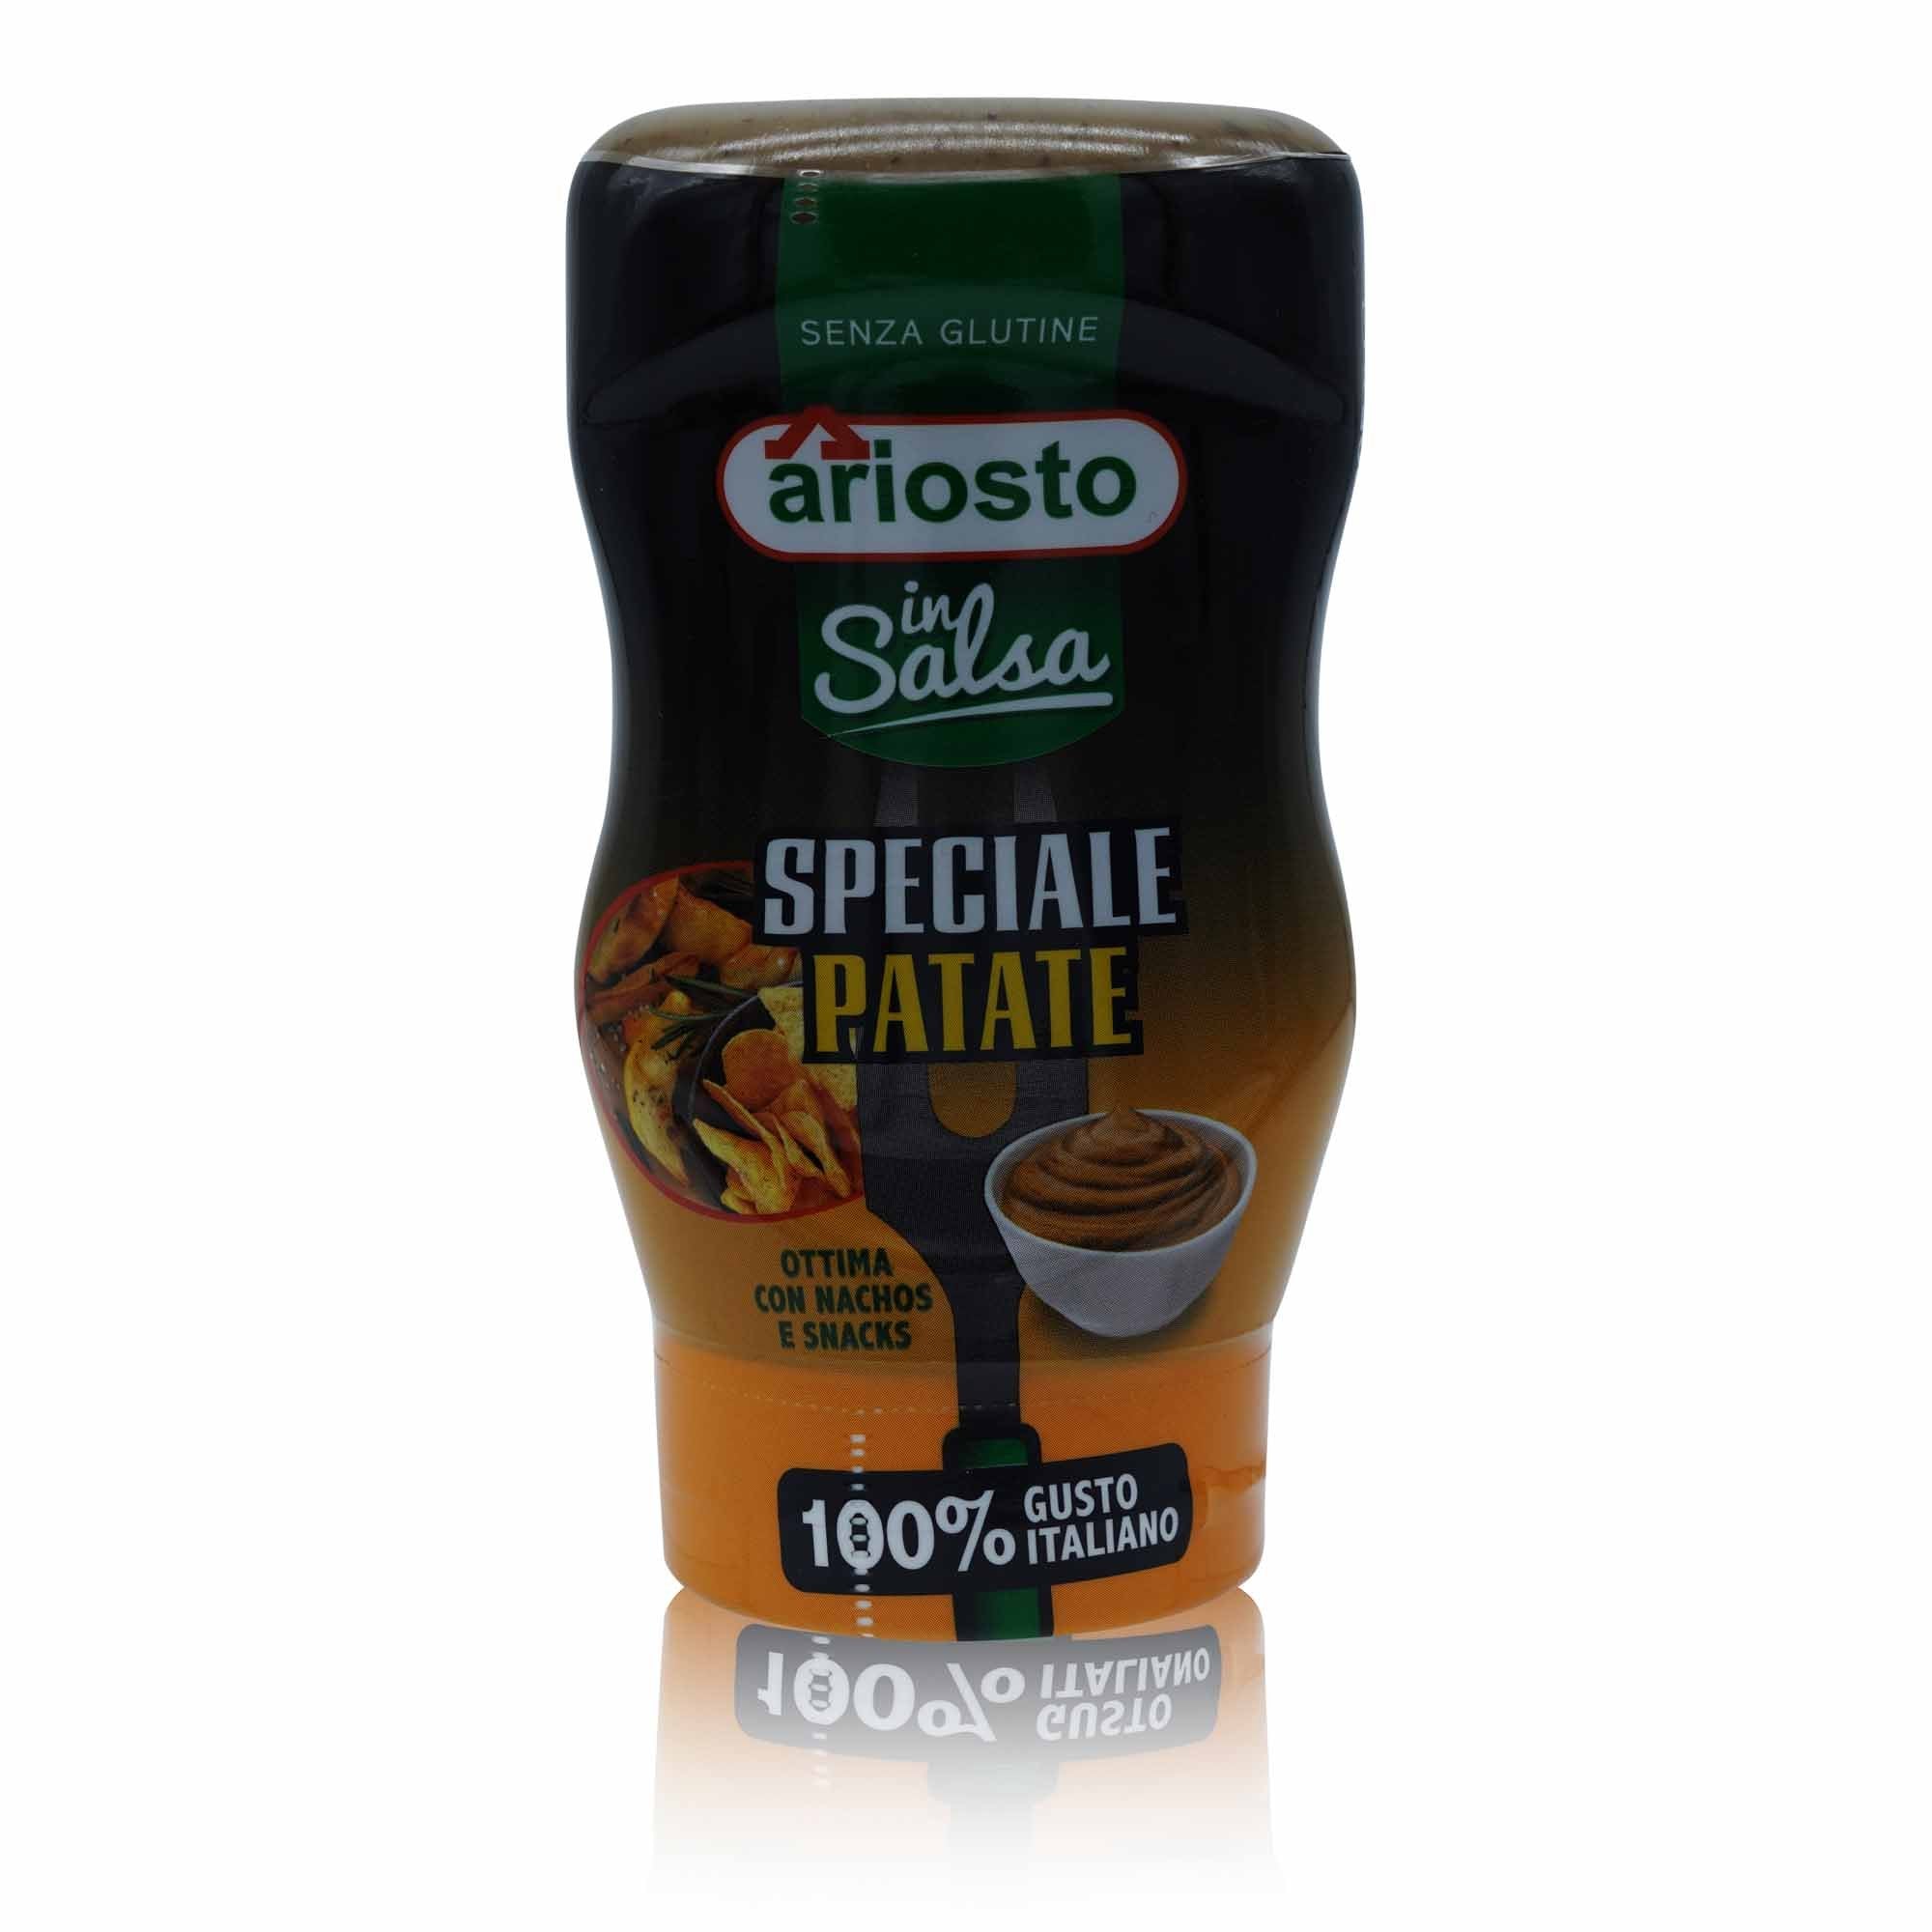 ARIOSTO Insalsa Patate – Salsa-Soße Speciale Kartoffel - 0,305kg